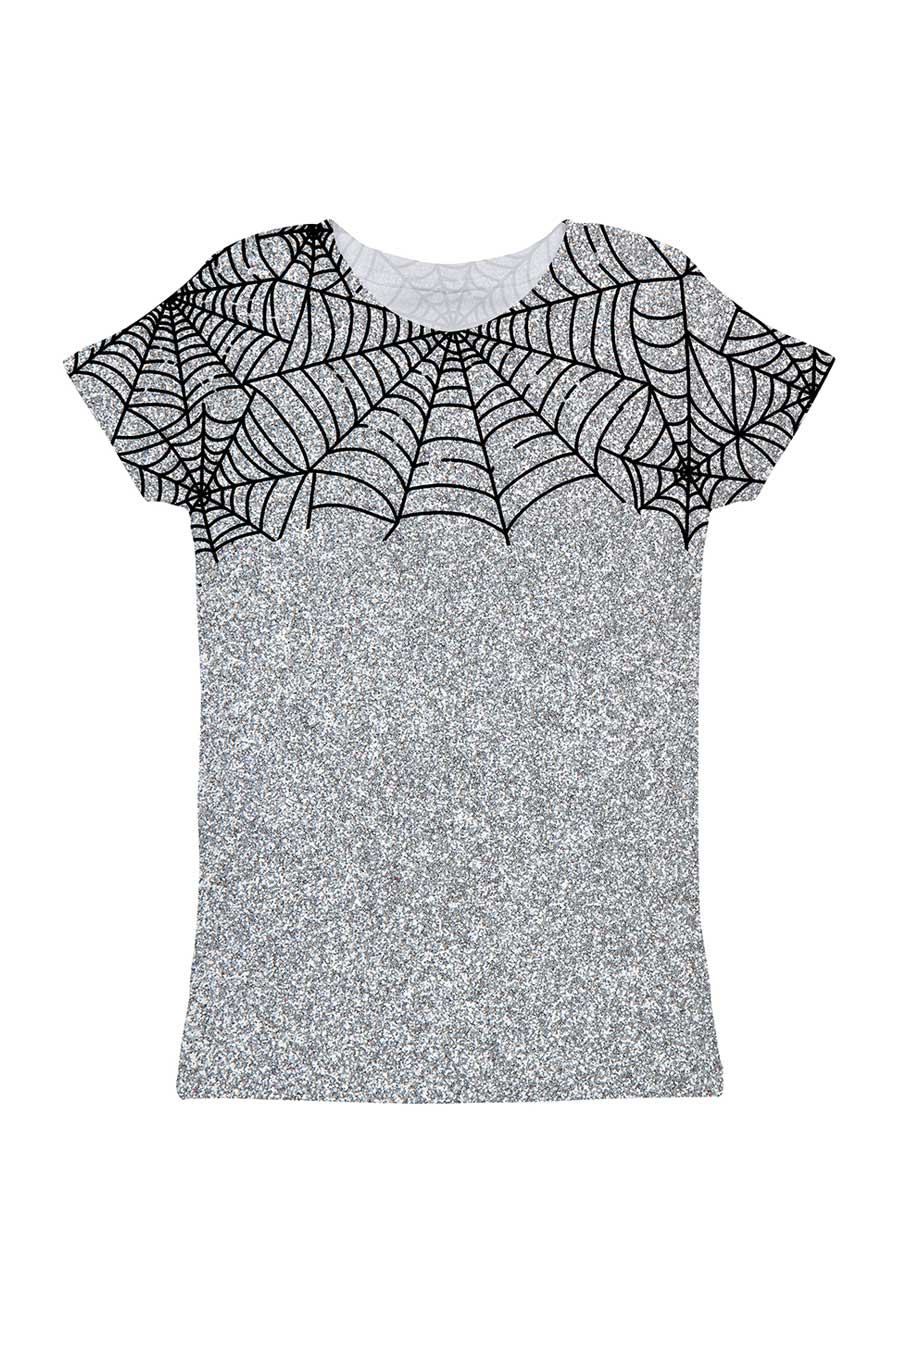 Bugs & Kisses Zoe Silver Grey Spider Web Glitter Print T-Shirt - Kids - Pineapple Clothing